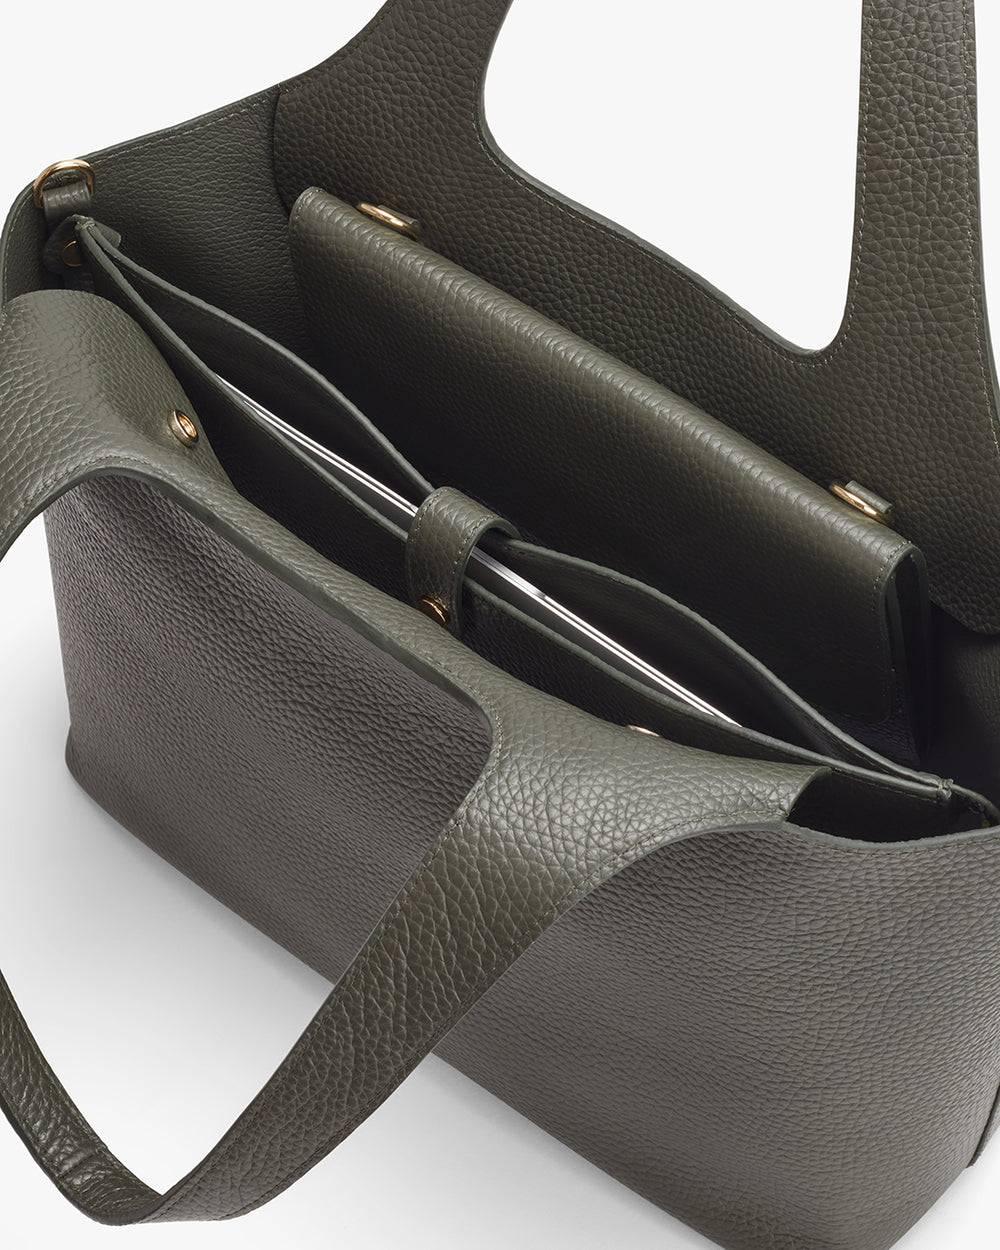 Open handbag showing interior compartments and handle.